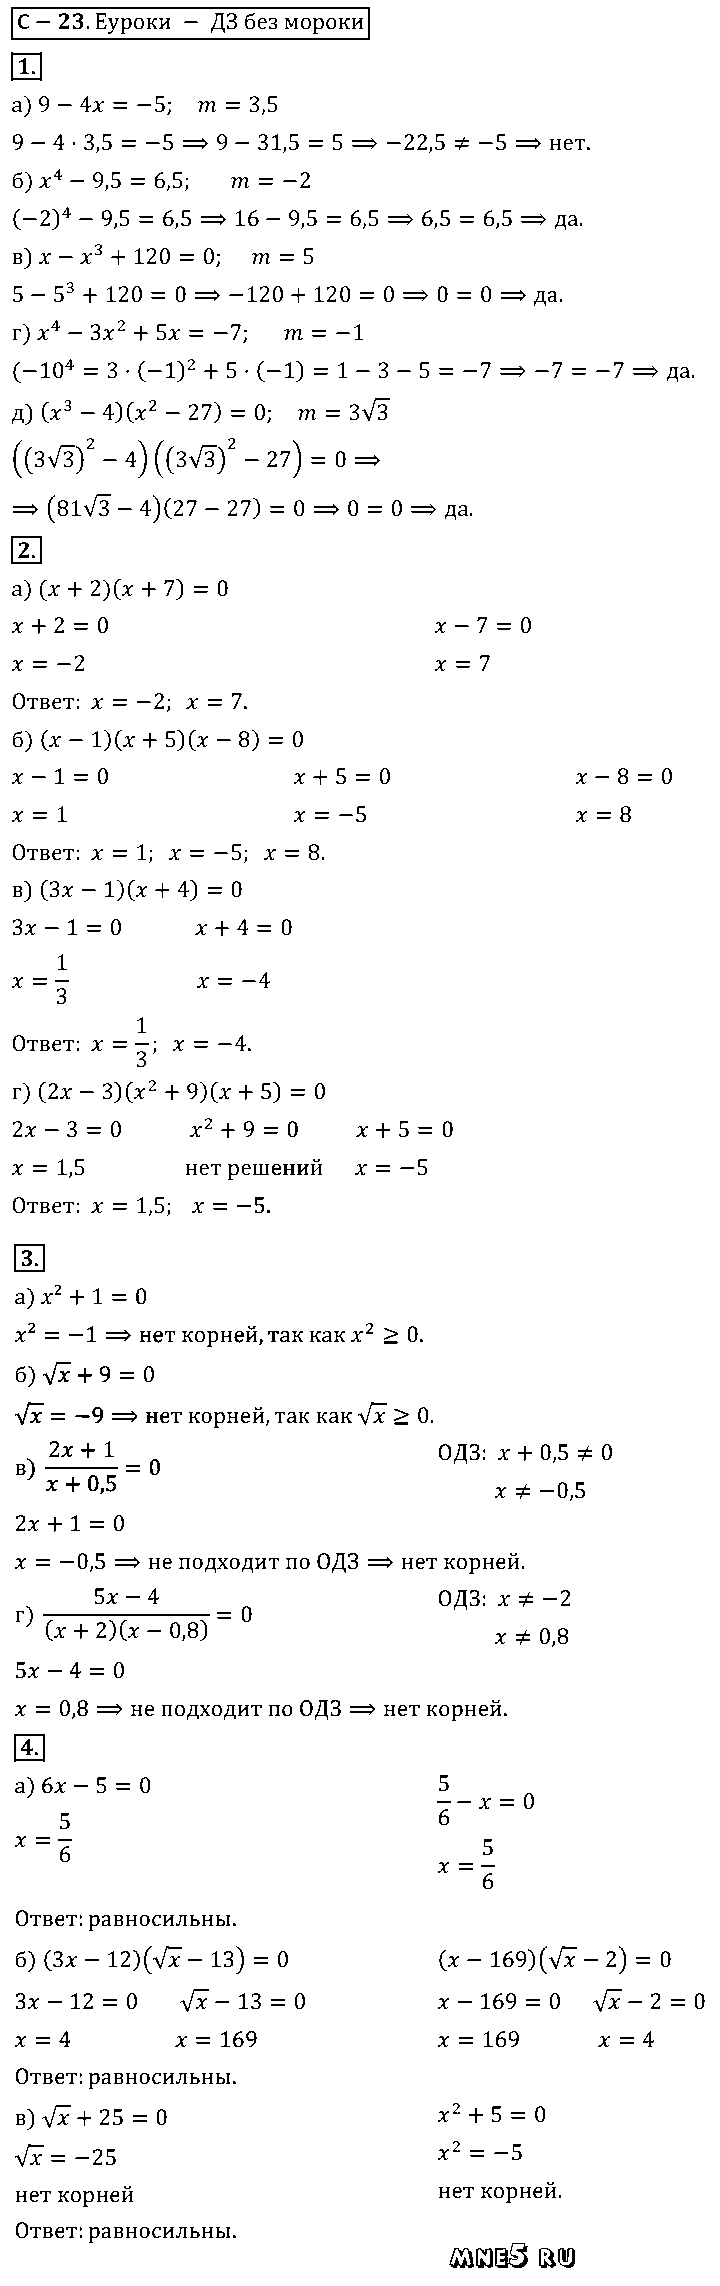 ГДЗ Алгебра 8 класс - С-23(23). Уравнения и их корни